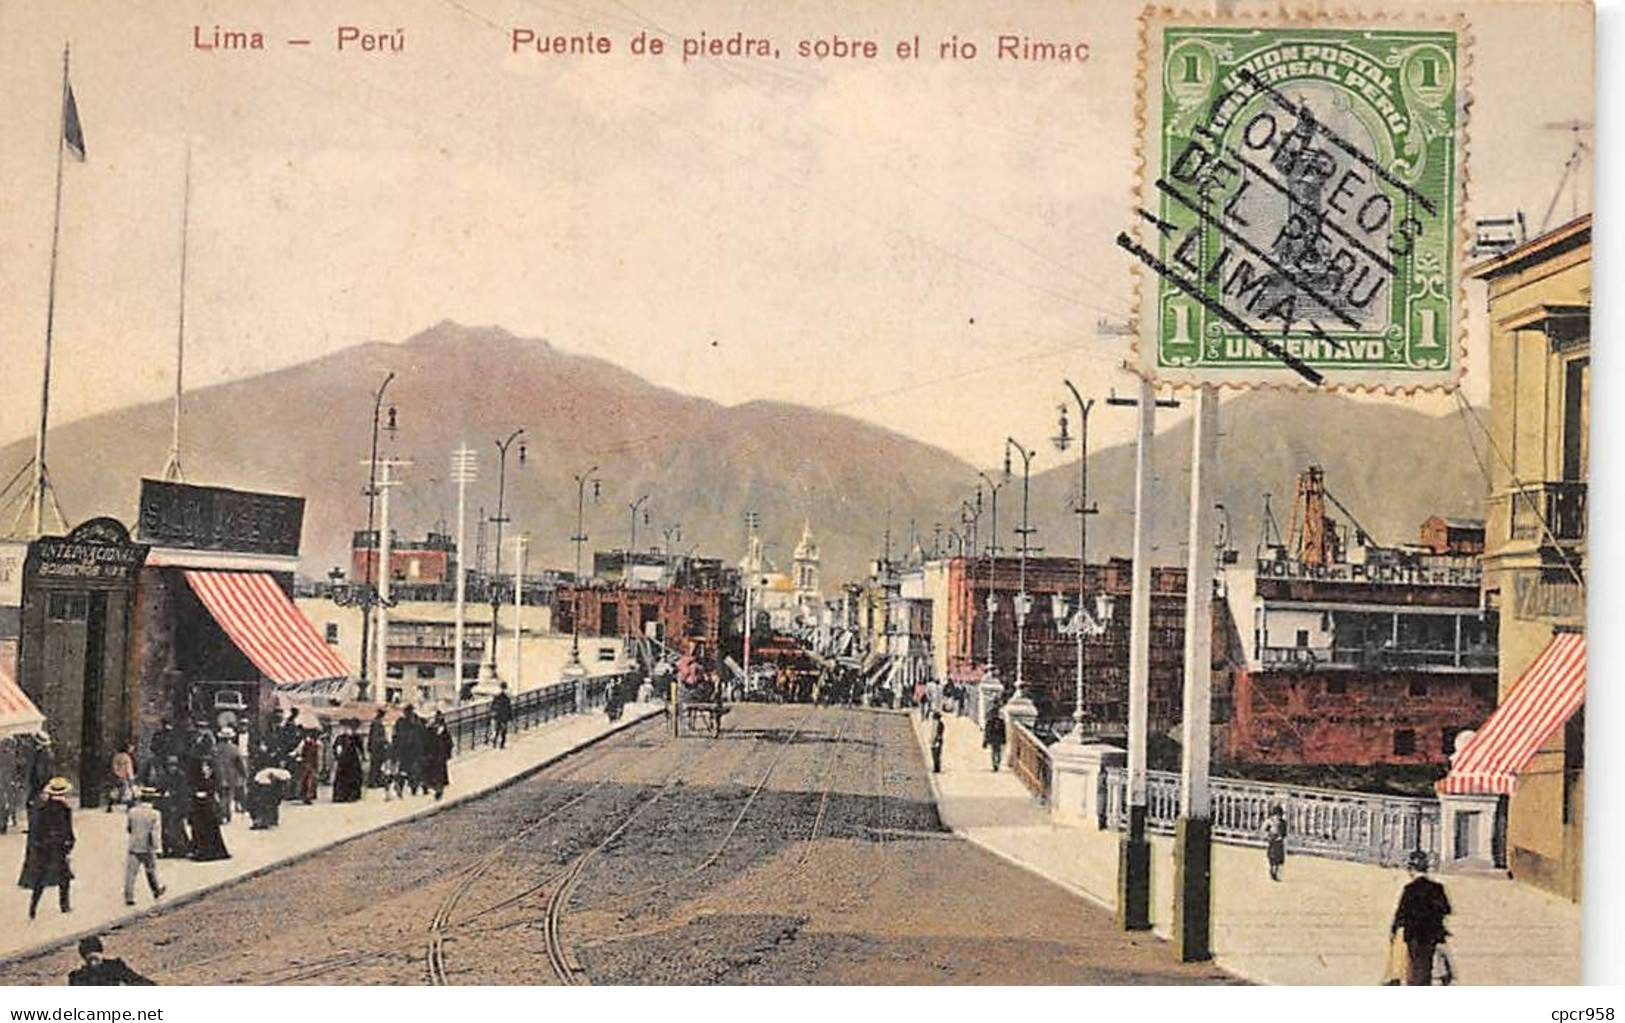 Pérou - N°79025 - LIMA - Puente De Piedra, Sobre El Rio Rimac - AFFRANCHISSEMENT DE COMPLAISANCE - Peru